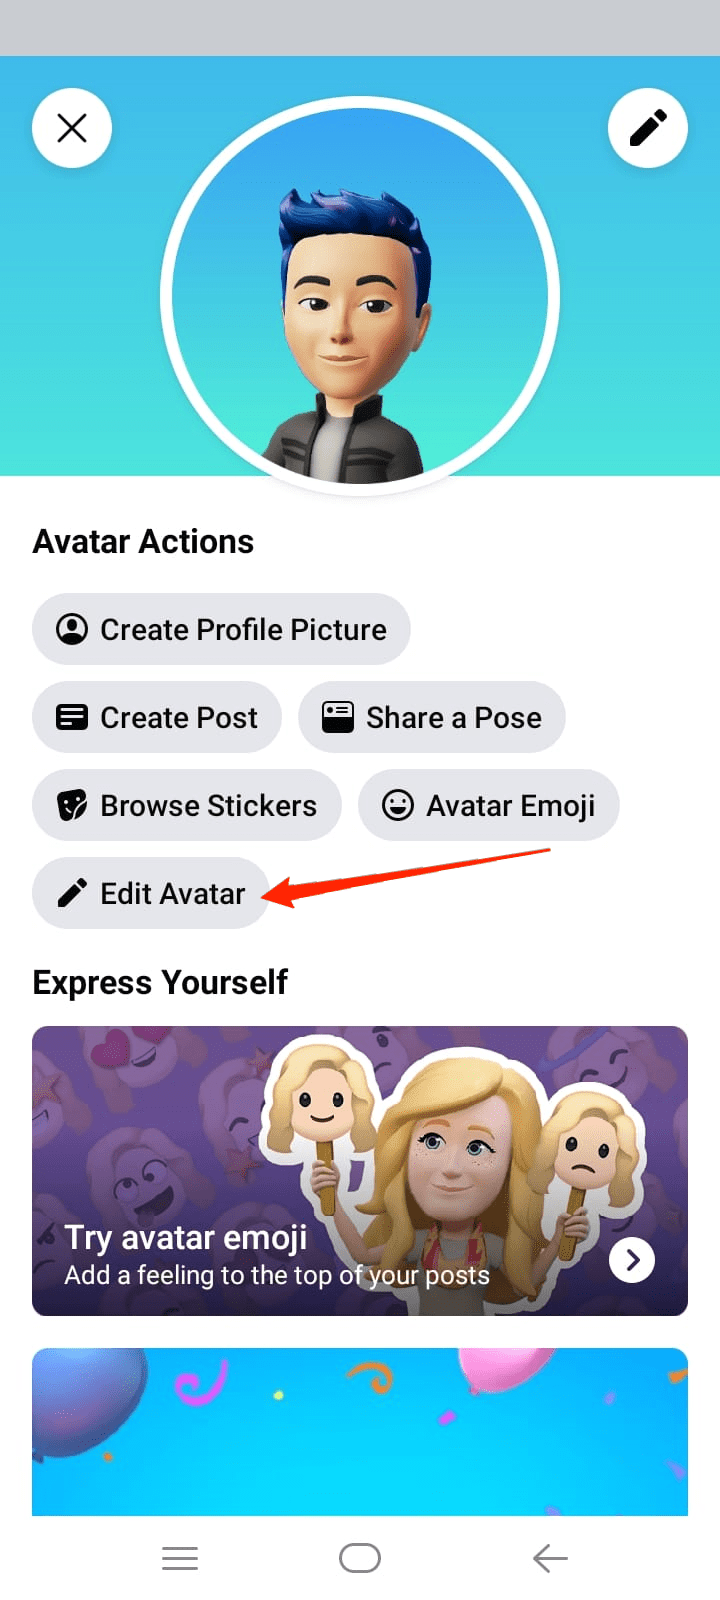 How to Create Digital Avatar in Facebook?